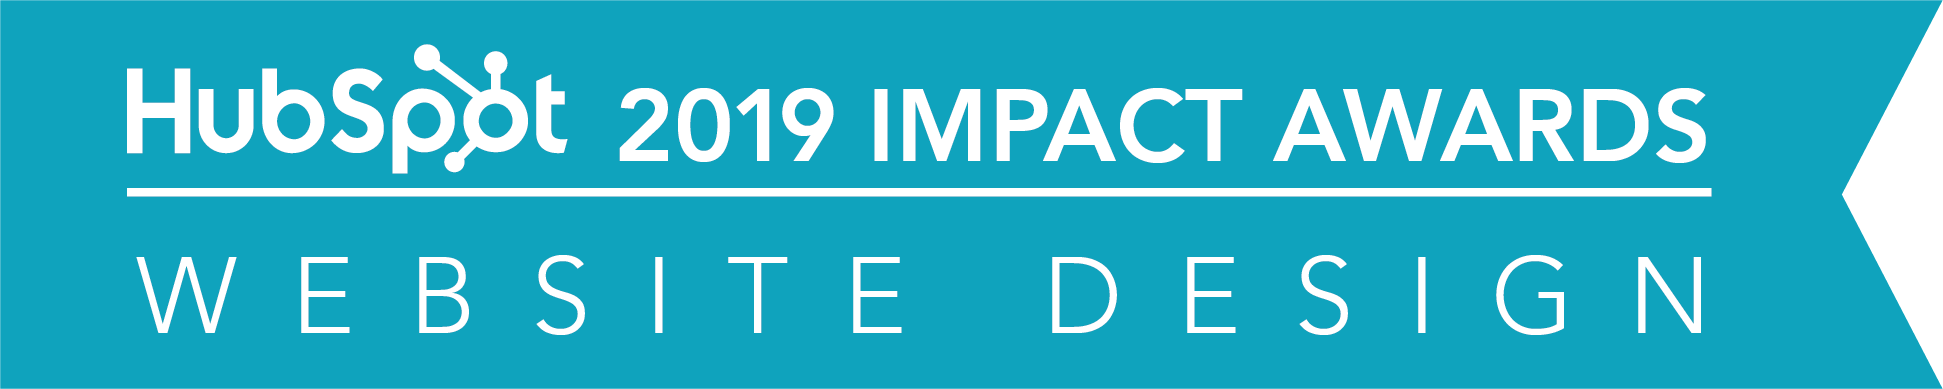 Hubspot_ImpactAwards_2019_WebsiteDesign-02-2